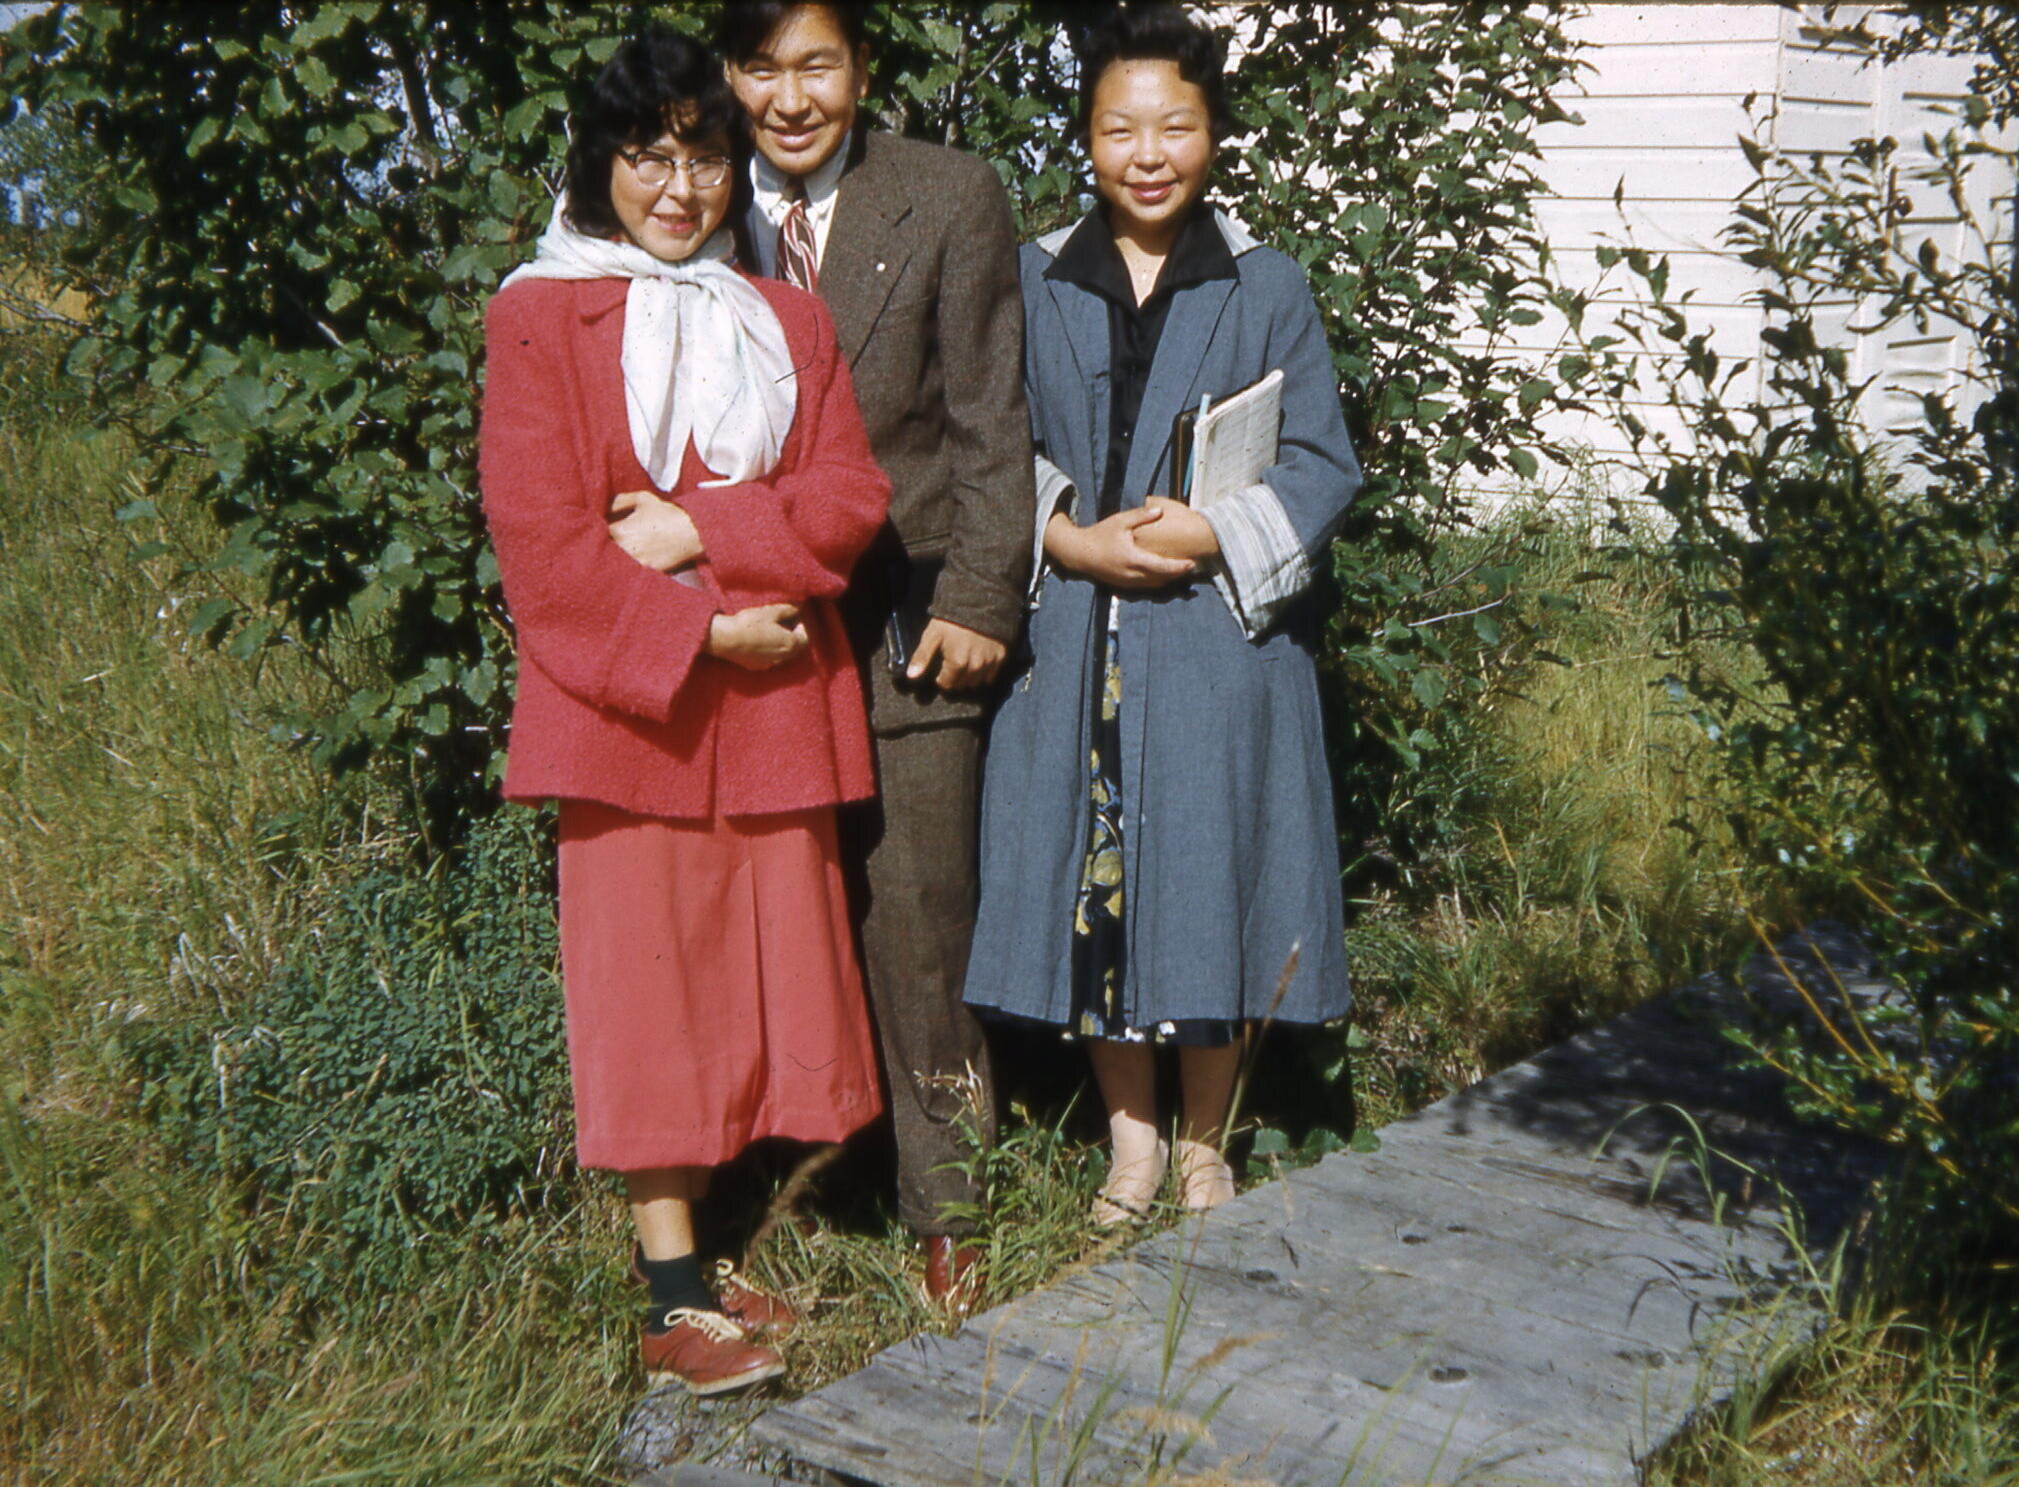 1958 Children in front of Cabin .jpg